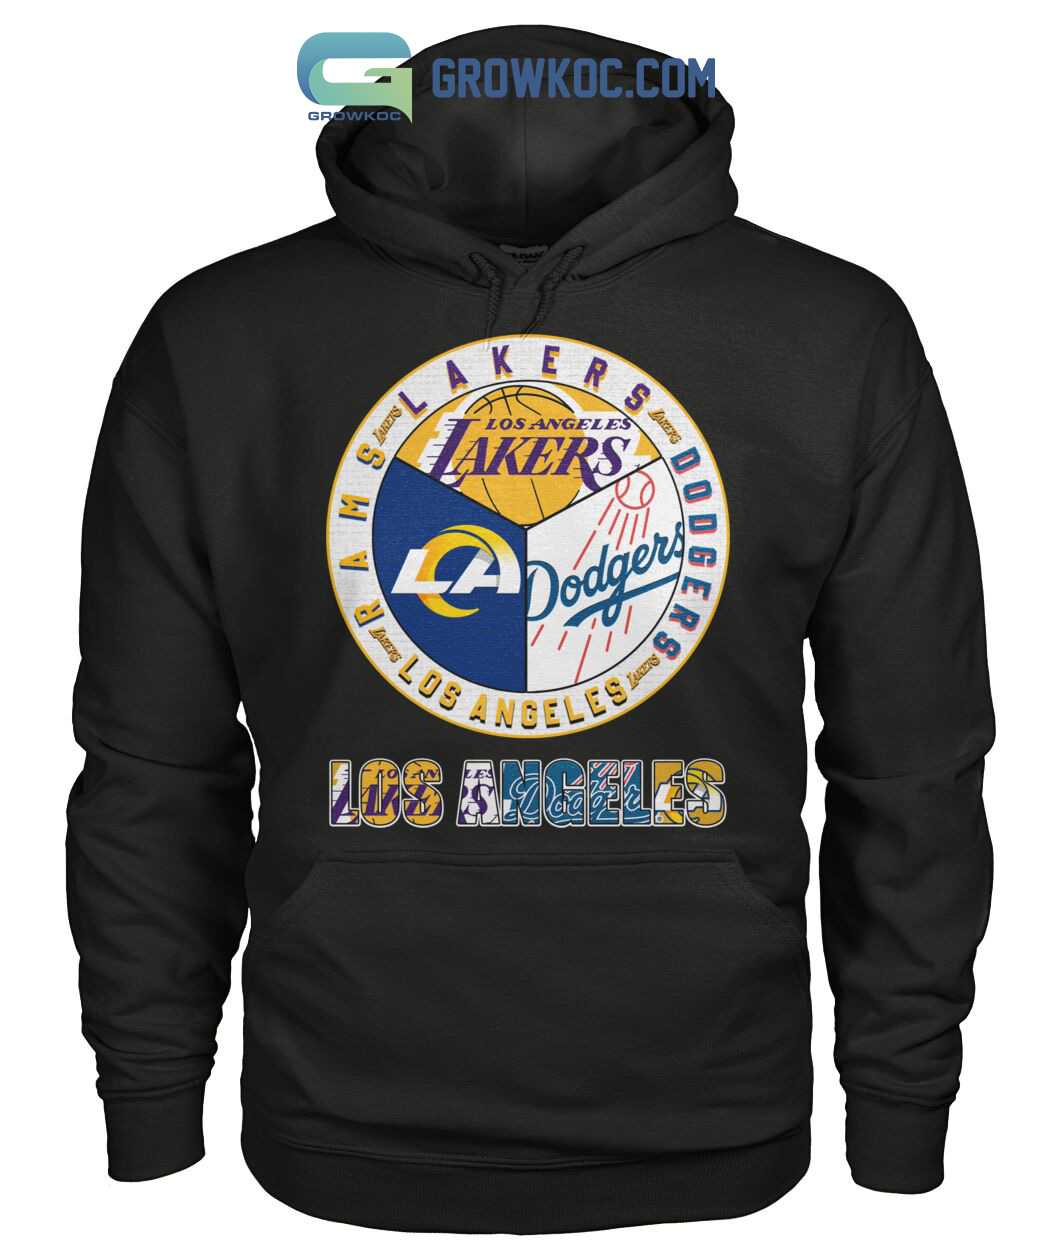 City of Champions Los Angeles LA Rams Lakers Dodgers shirt, hoodie